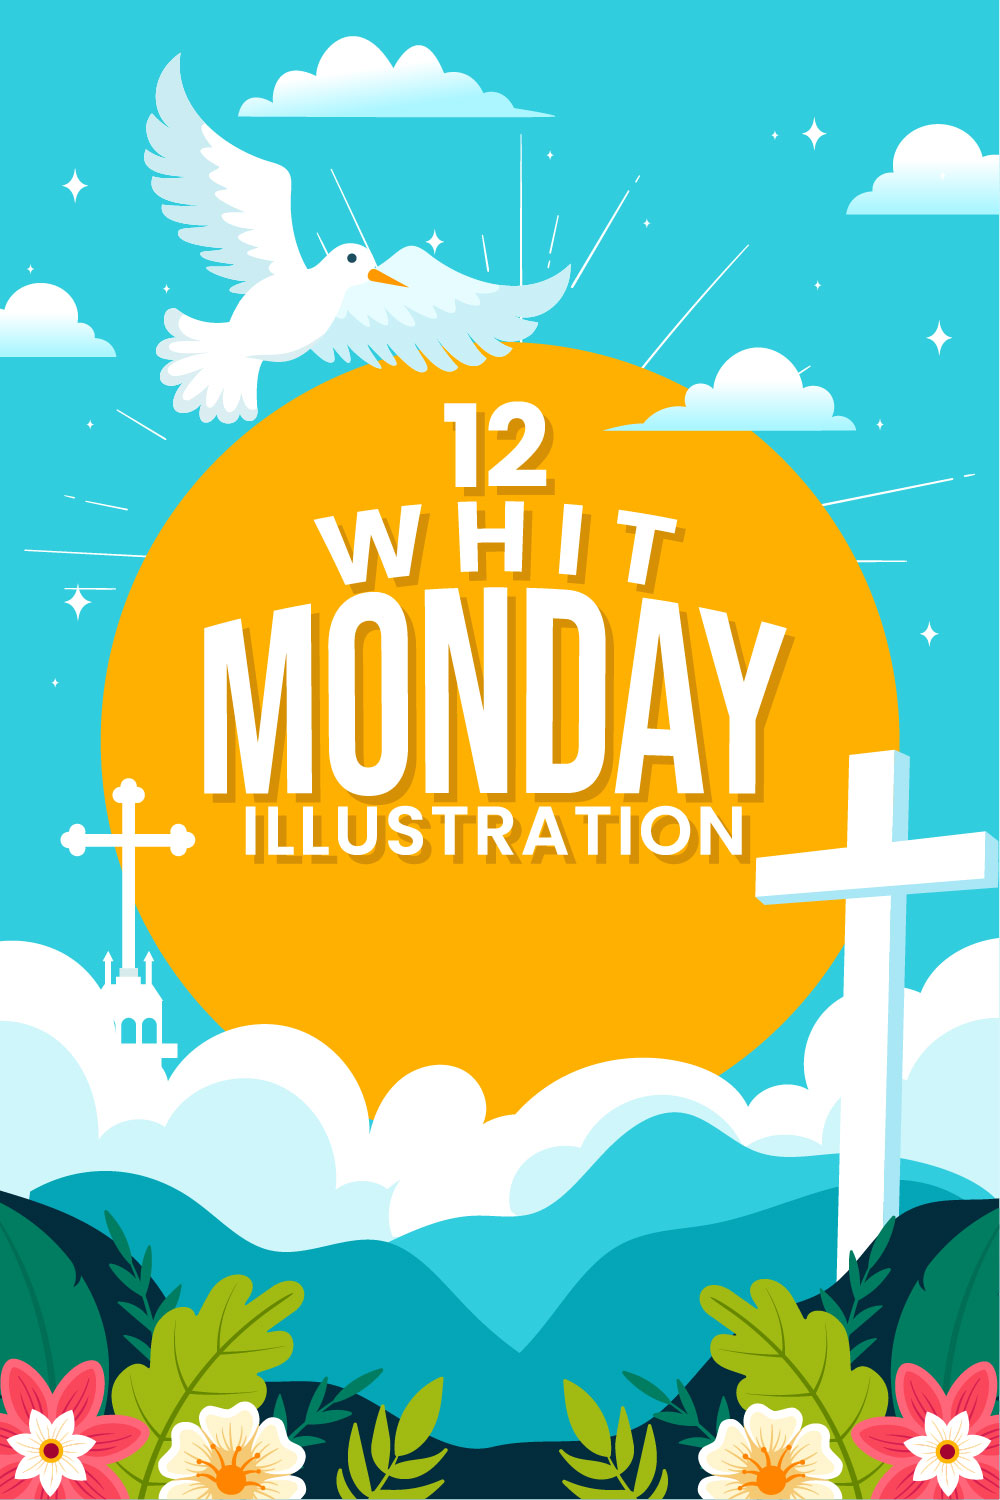 12 Whit Monday Illustration pinterest preview image.